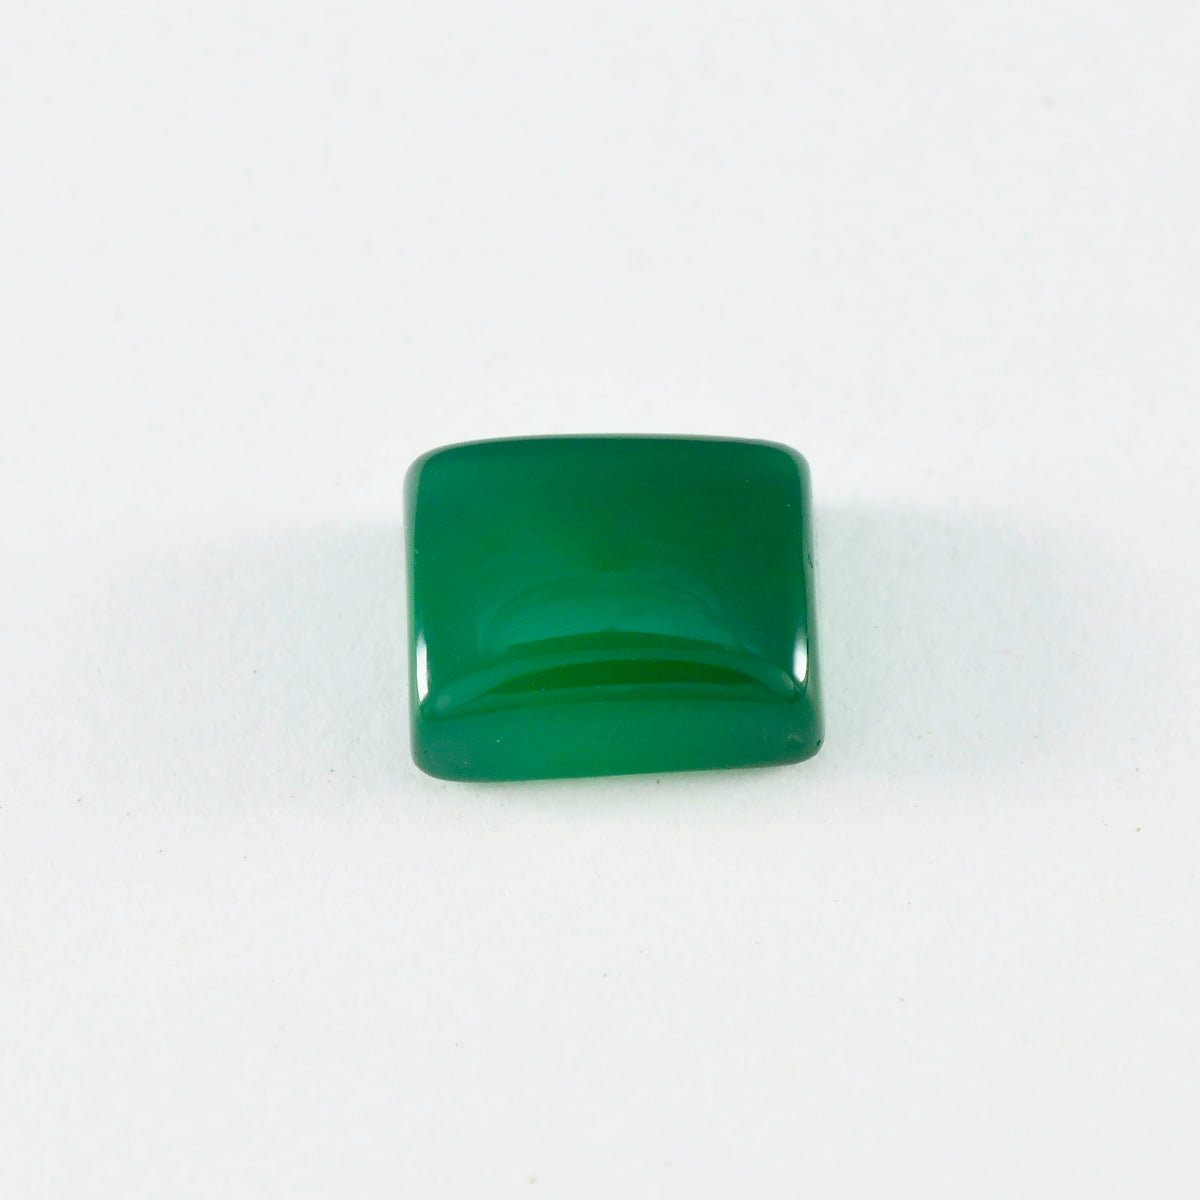 Riyogems 1PC groene onyx cabochon 9x11 mm achthoekige vorm knappe kwaliteit edelsteen